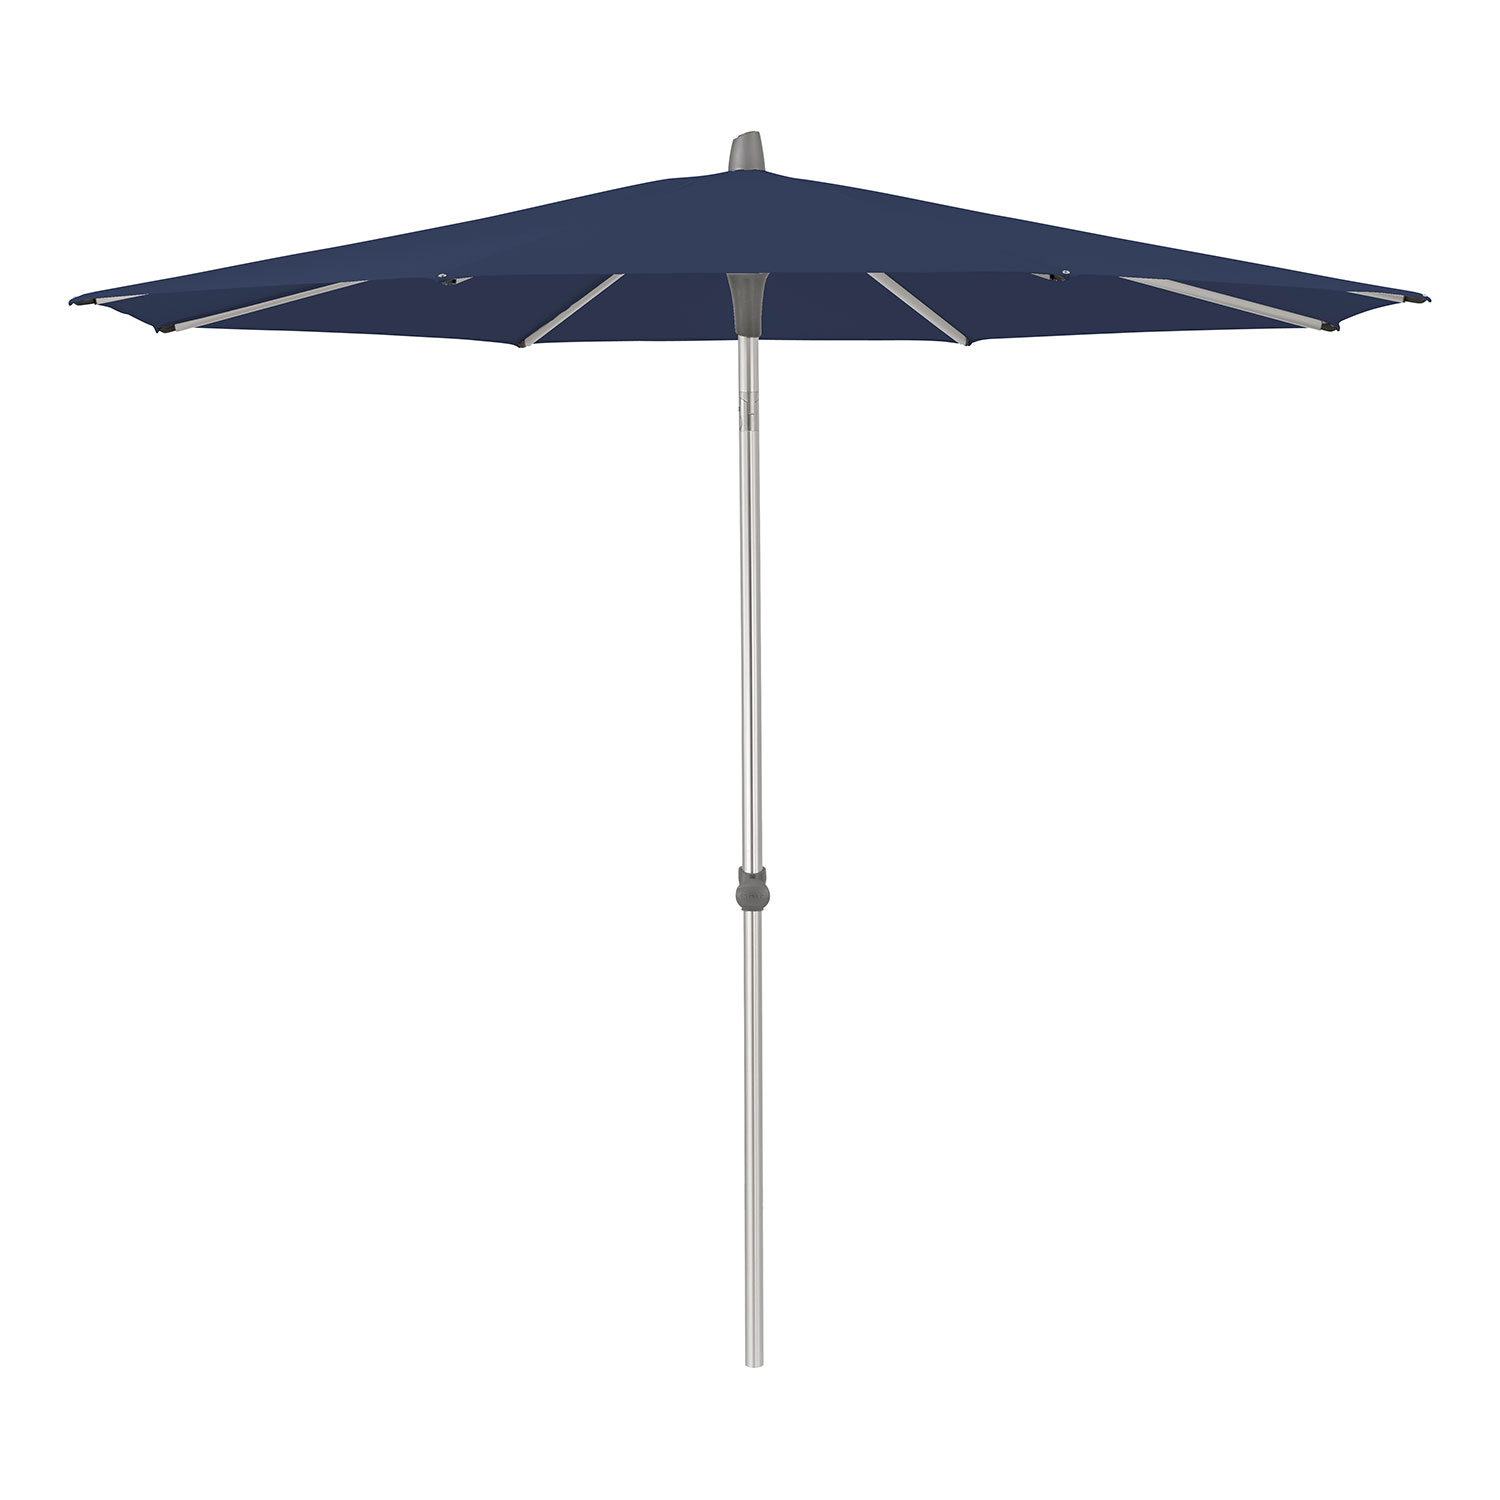 Glatz Alu-smart parasoll 200 cm kat.5 530 atlantic